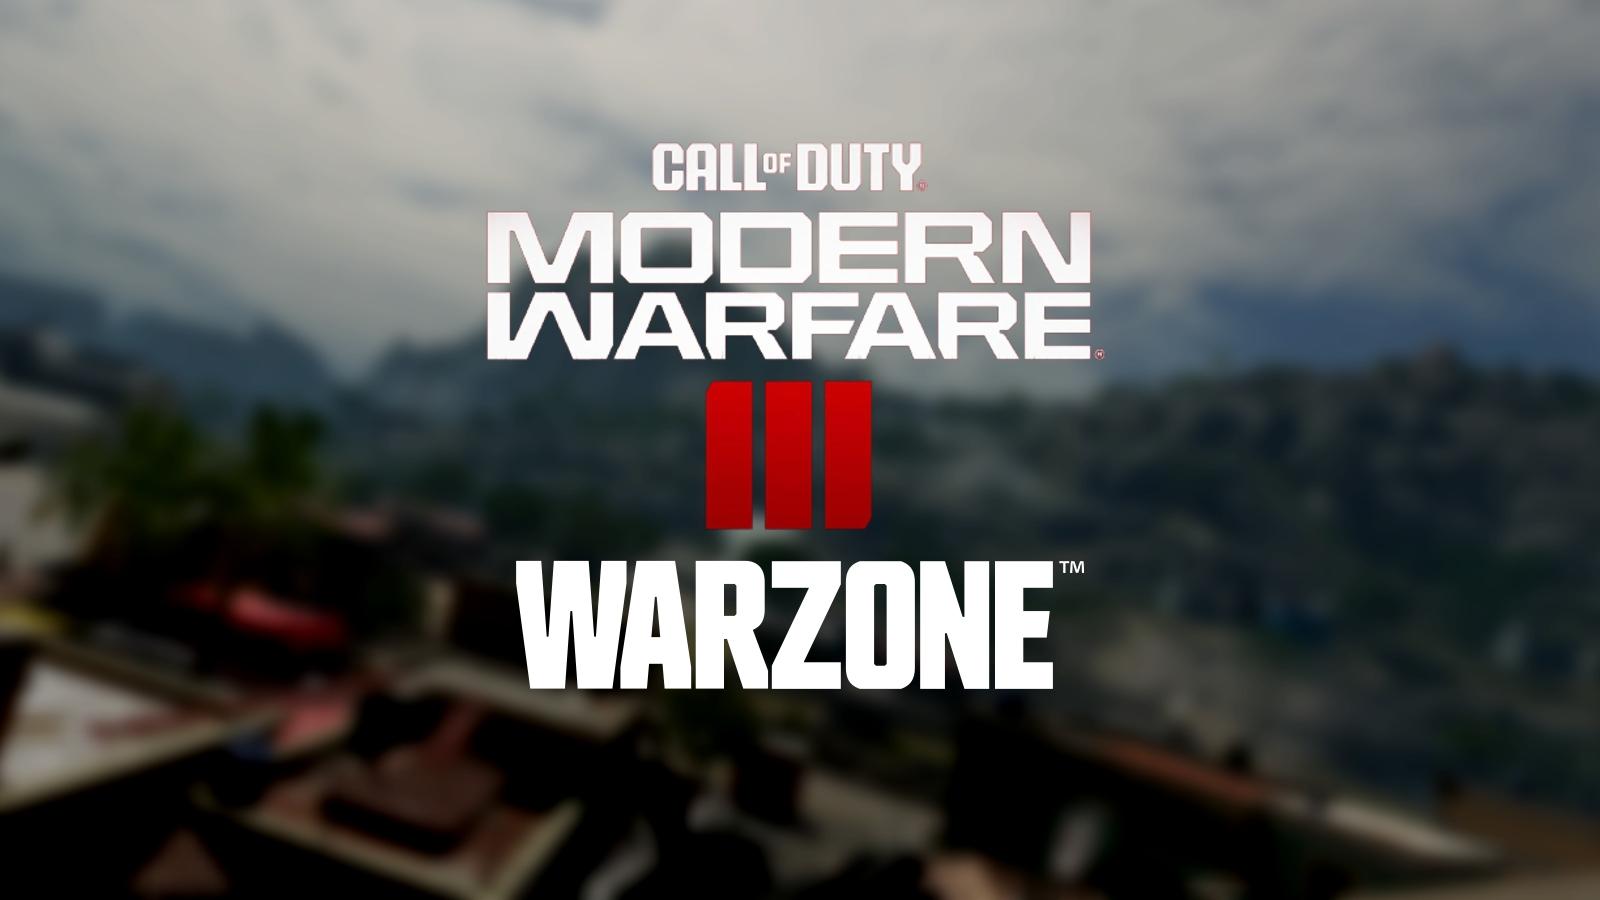 modern warfare 3 logo with new warzone logo on top of blurred image of mercado las almas